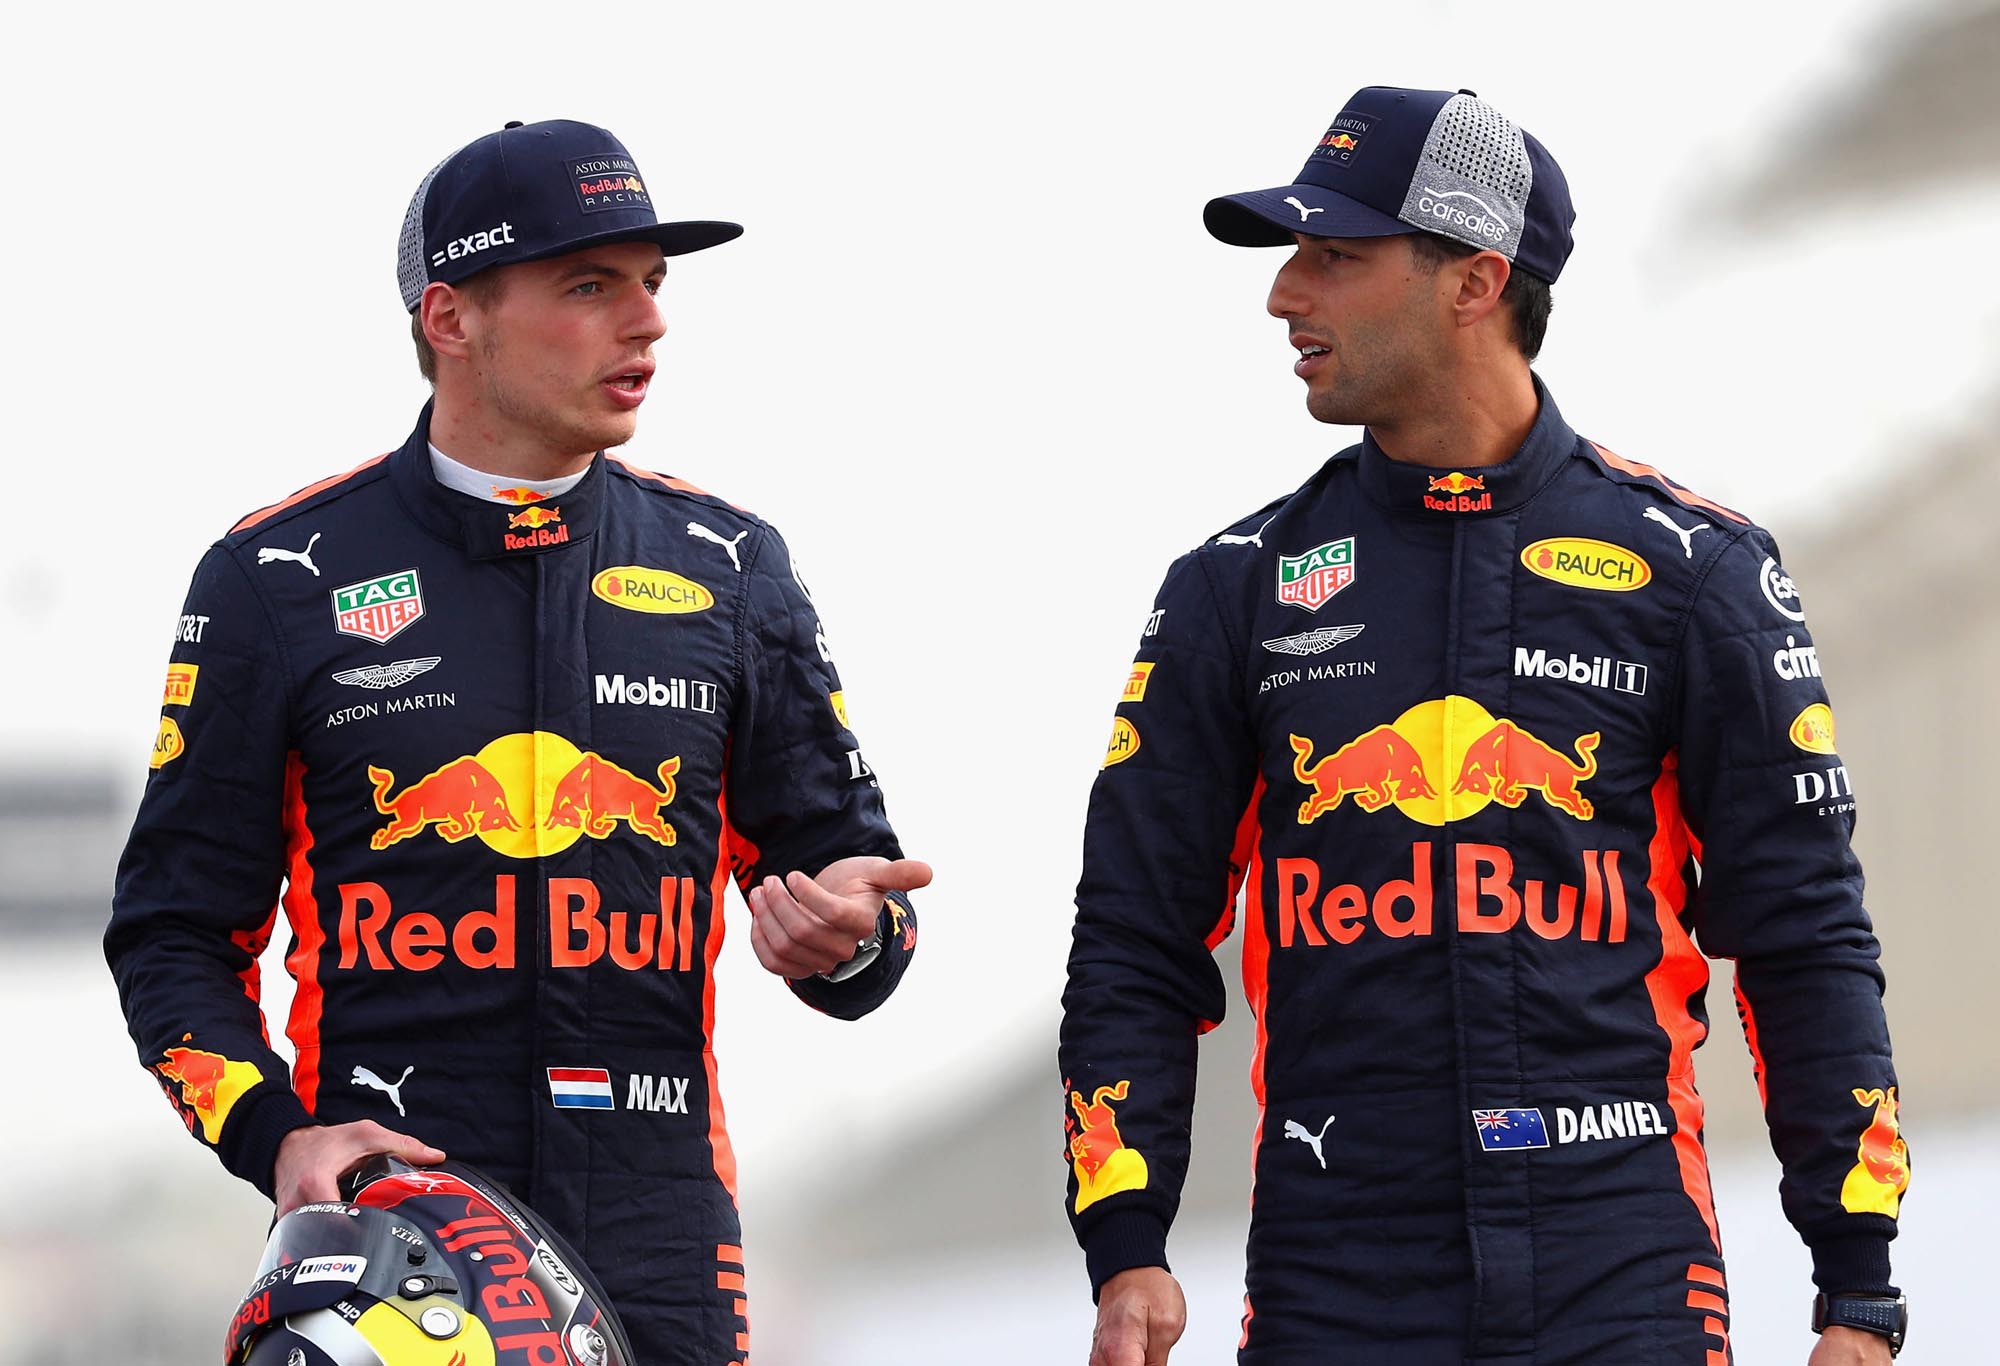 Red Bull Racing's Daniel Ricciardo and Max Verstappen at the 2018 Bahrain Grand Prix.